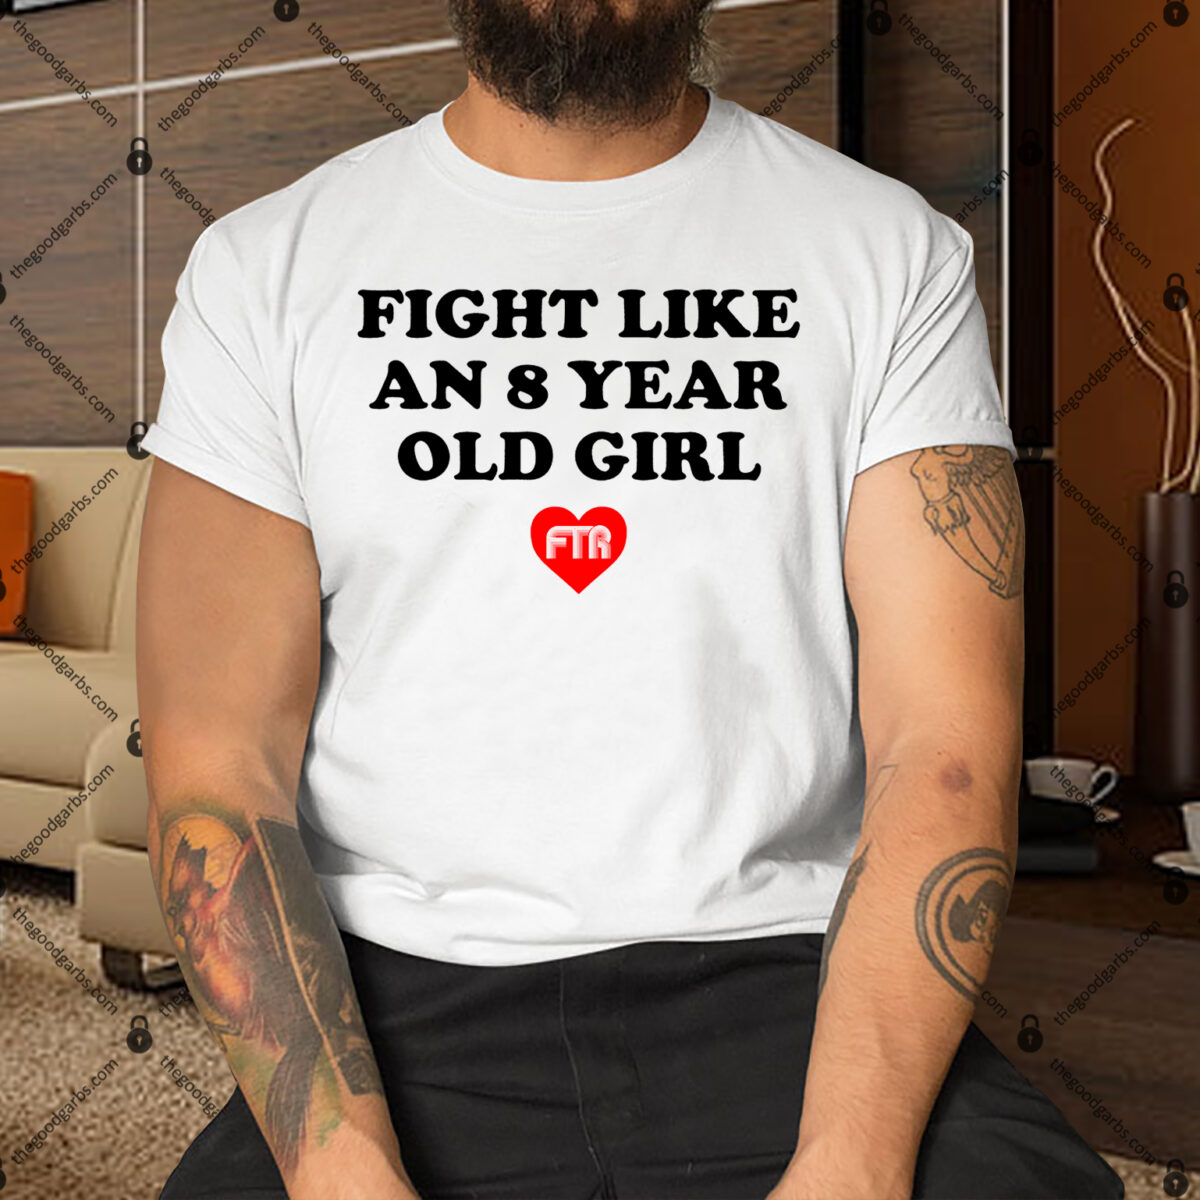 Fight Like An 8 Year Old Girl Ftr Shirt